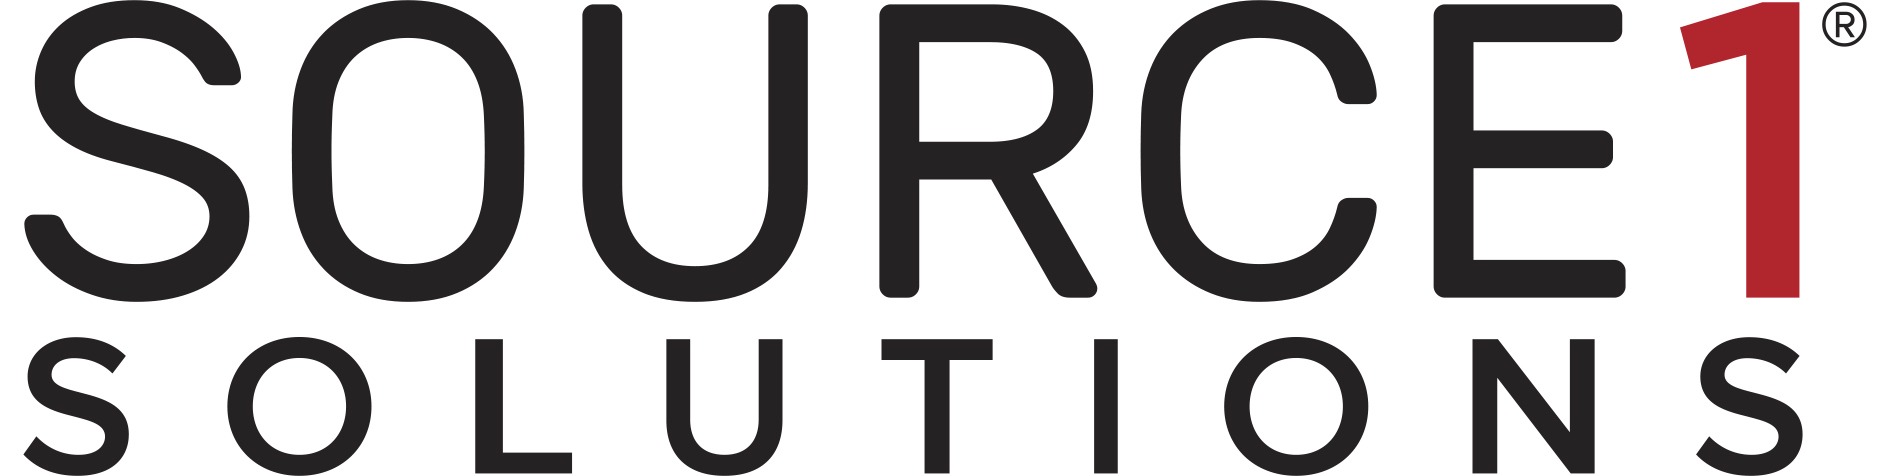 Source 1 logo